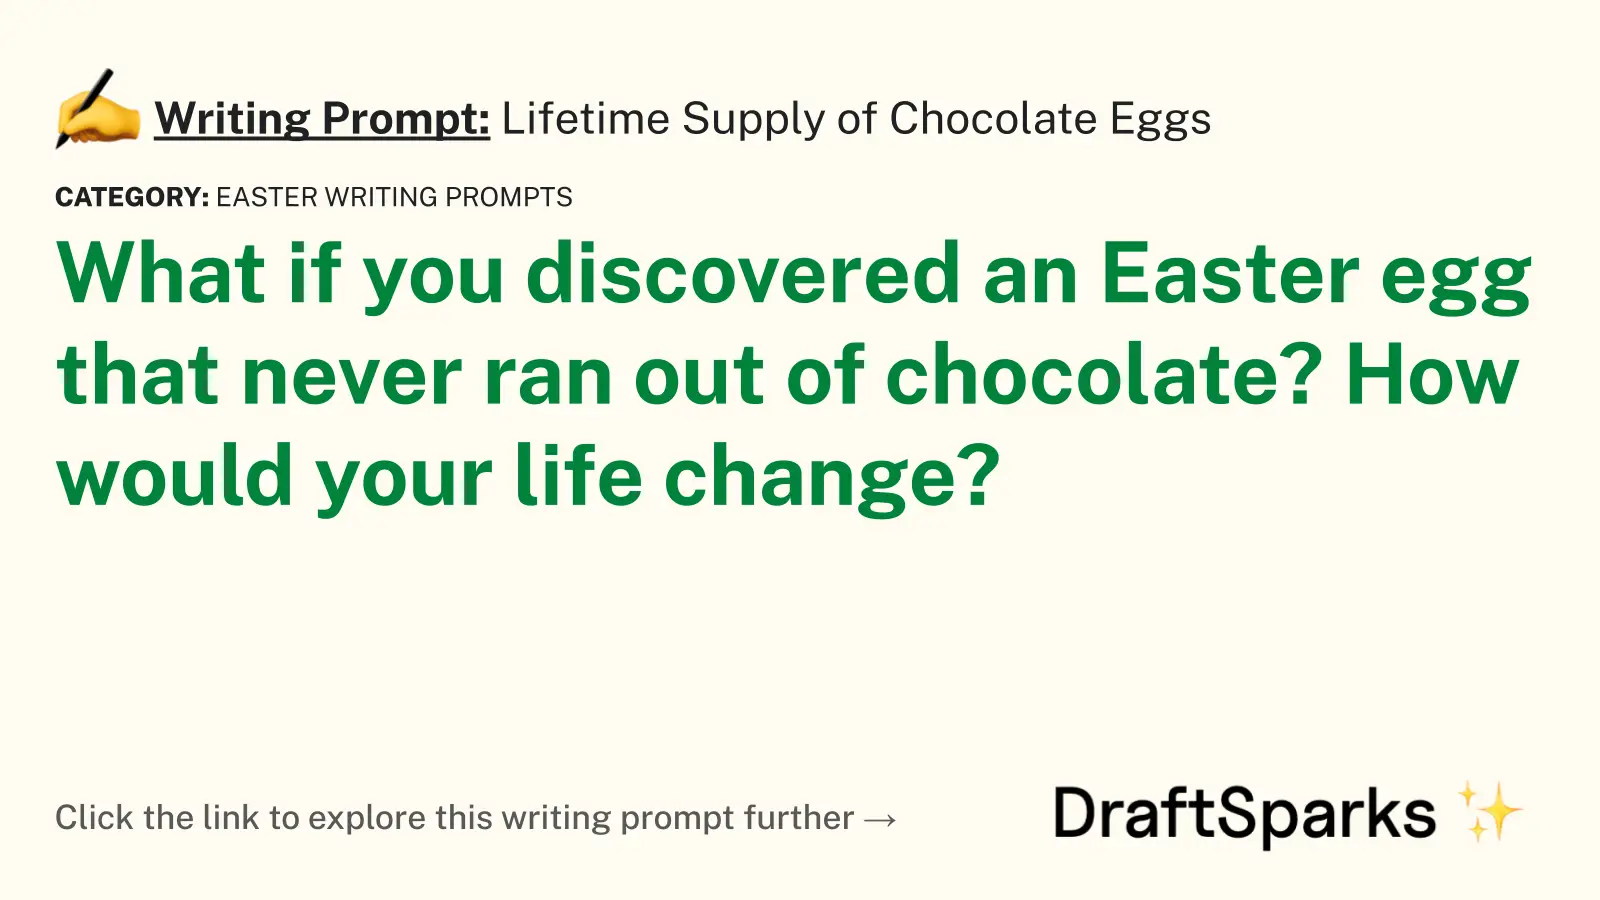 Lifetime Supply of Chocolate Eggs